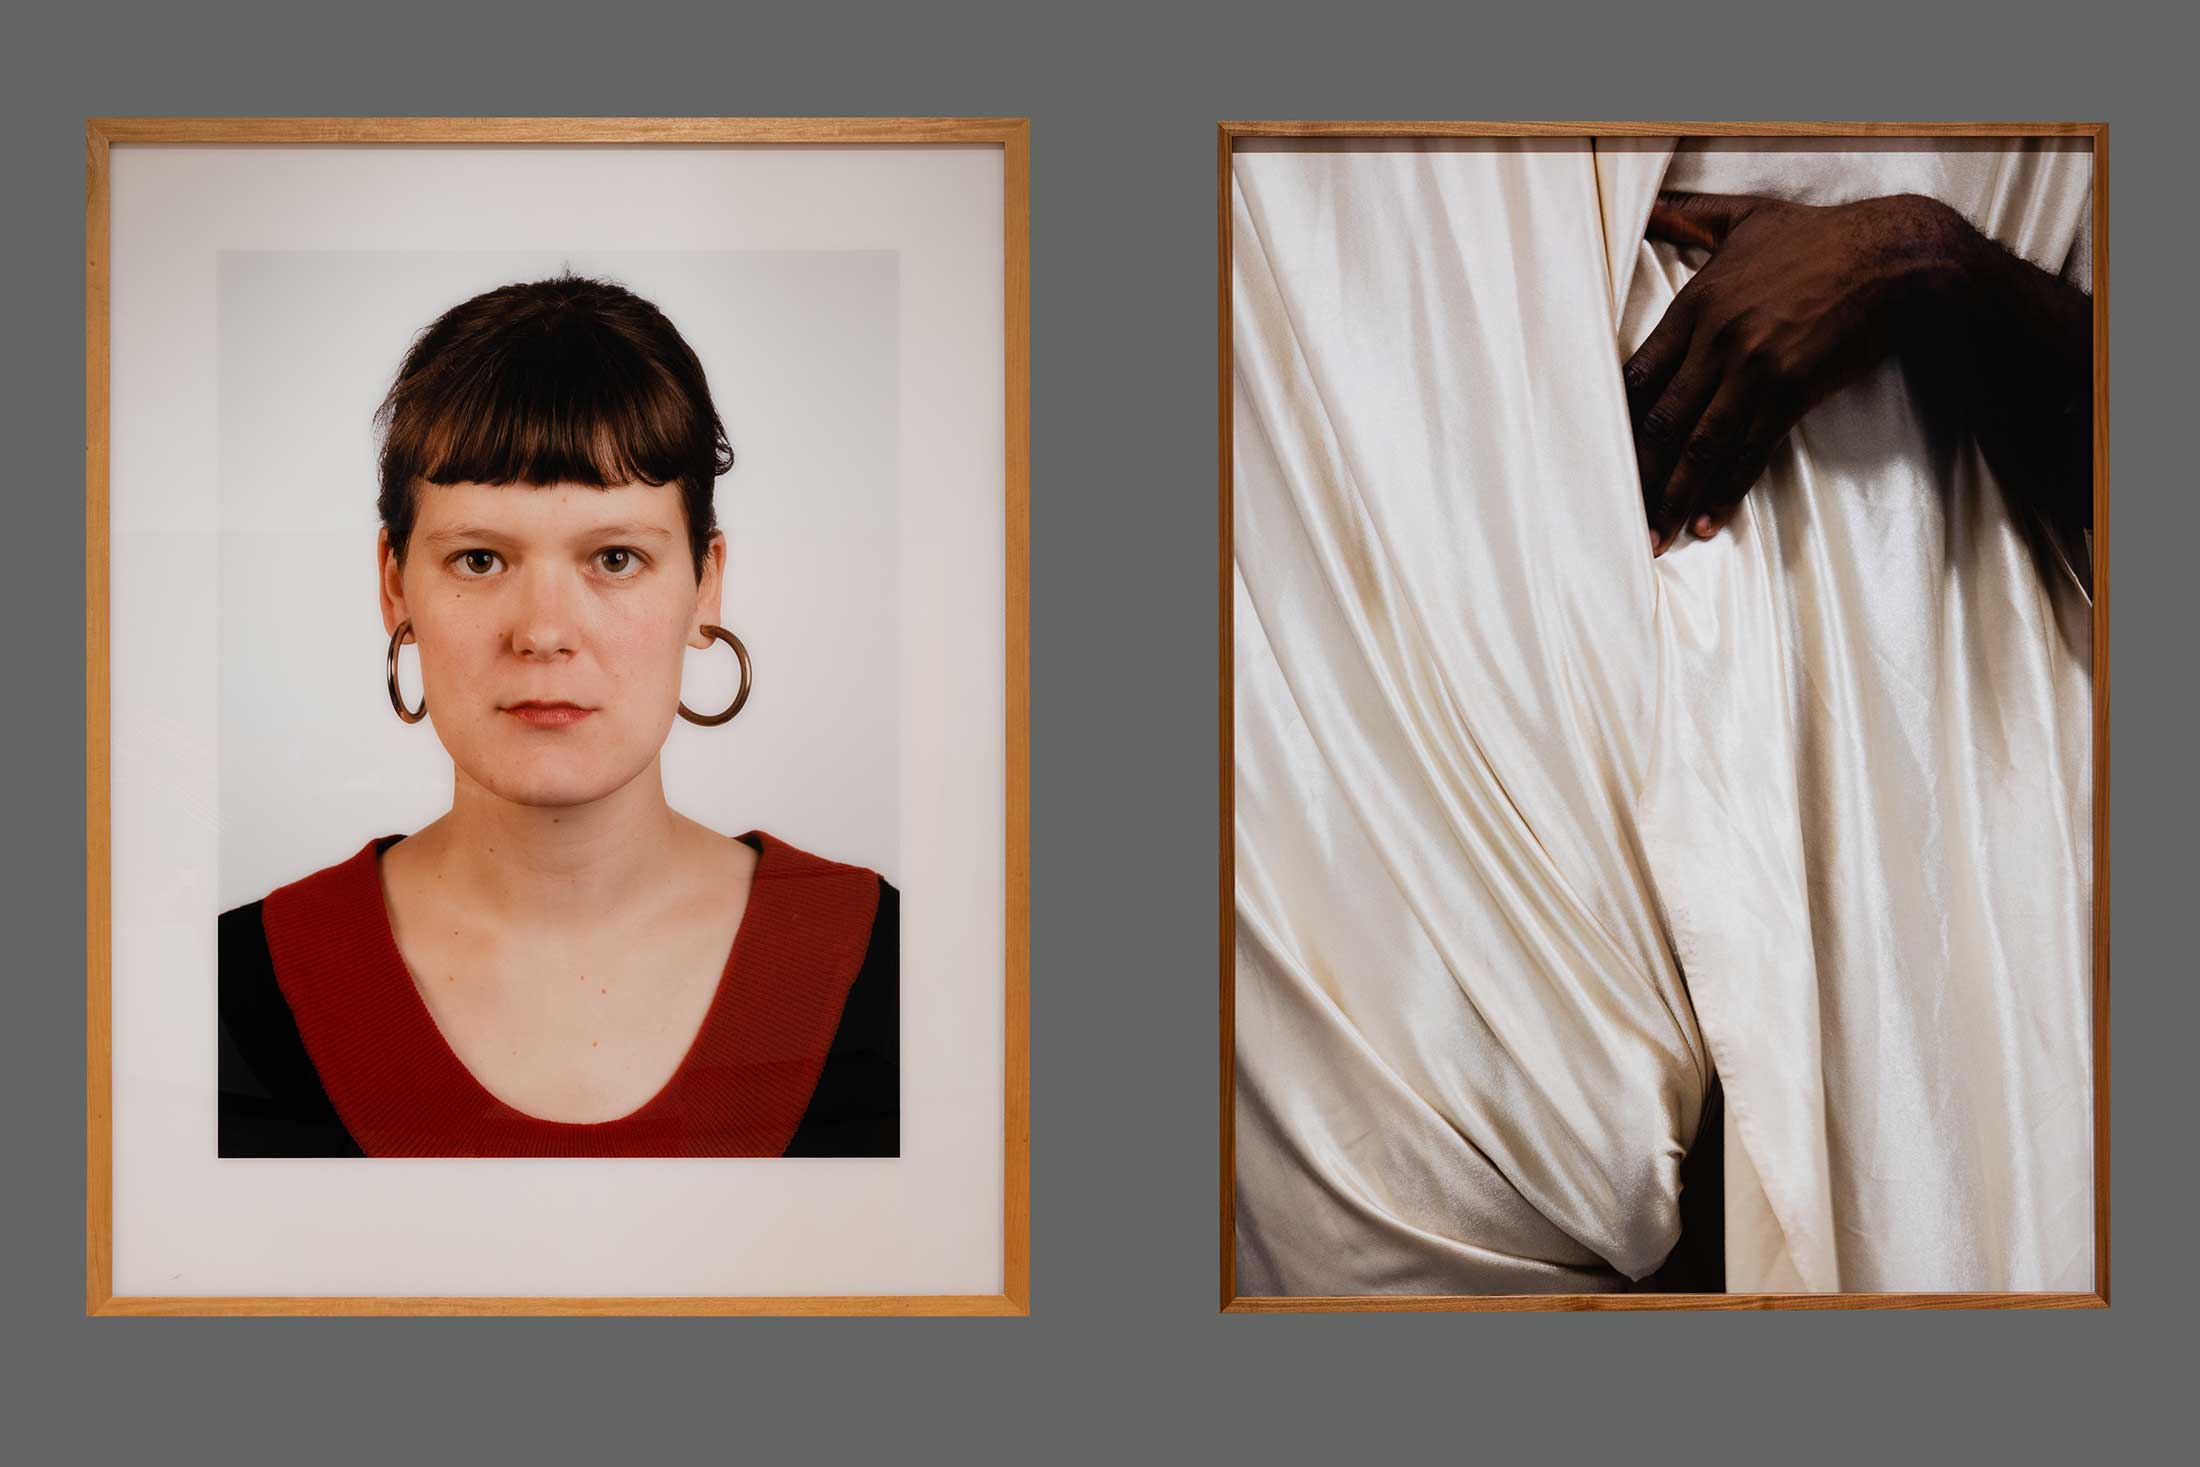 Left: Portrait (Elke Dende) by Thomas Ruff; Right: Draping by Paul Mpagi Sepuya